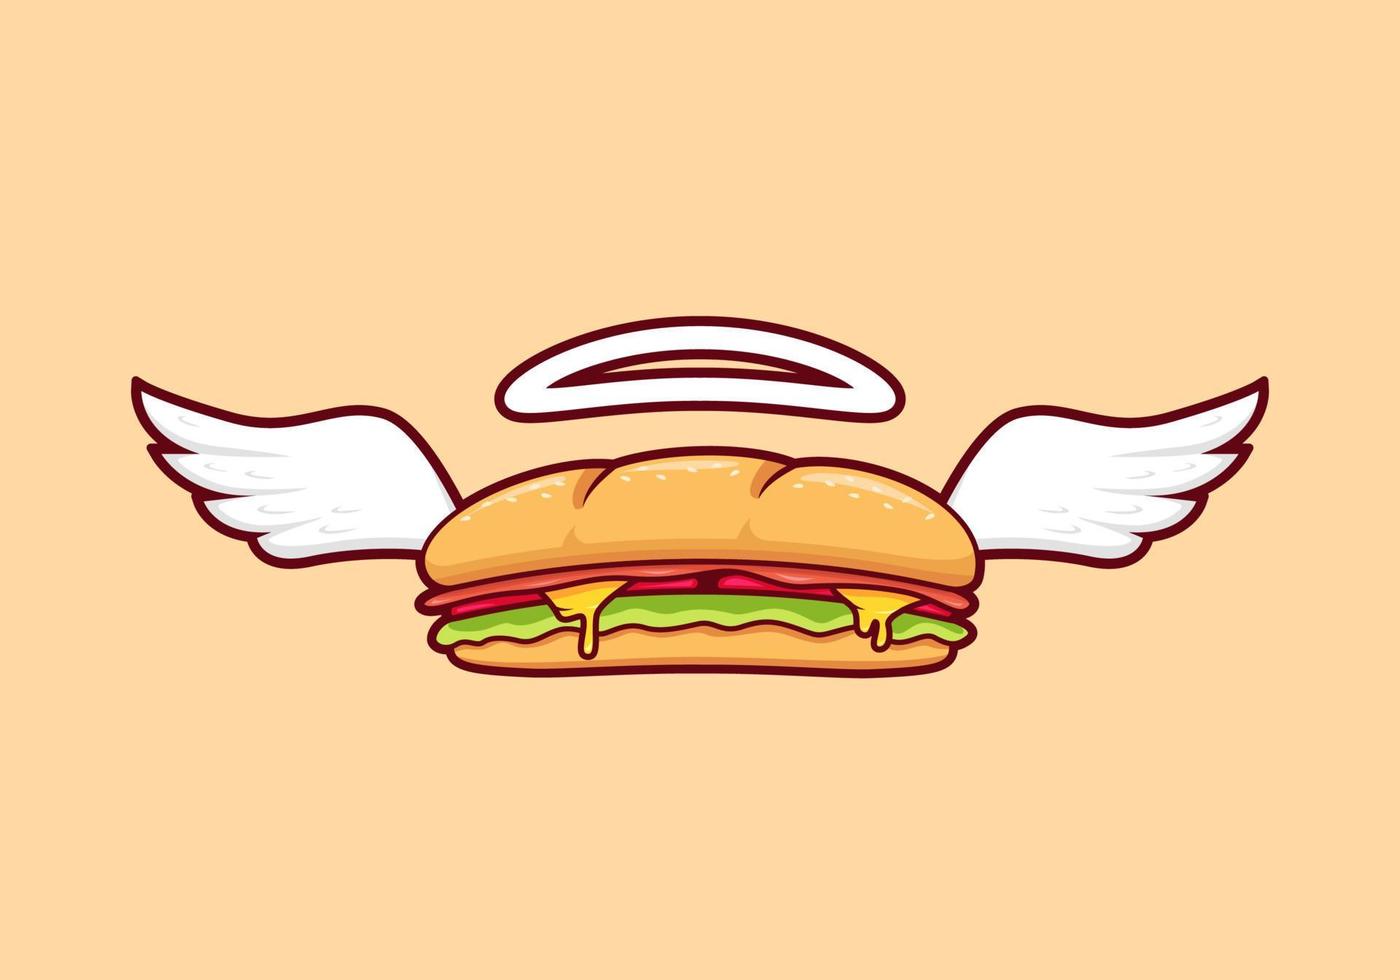 U-Boot-Brot-Baguette-Sandwich mit Flügelfliegen, Engel-Baguette-Sandwich mit Flügelbrot-Illustration vektor